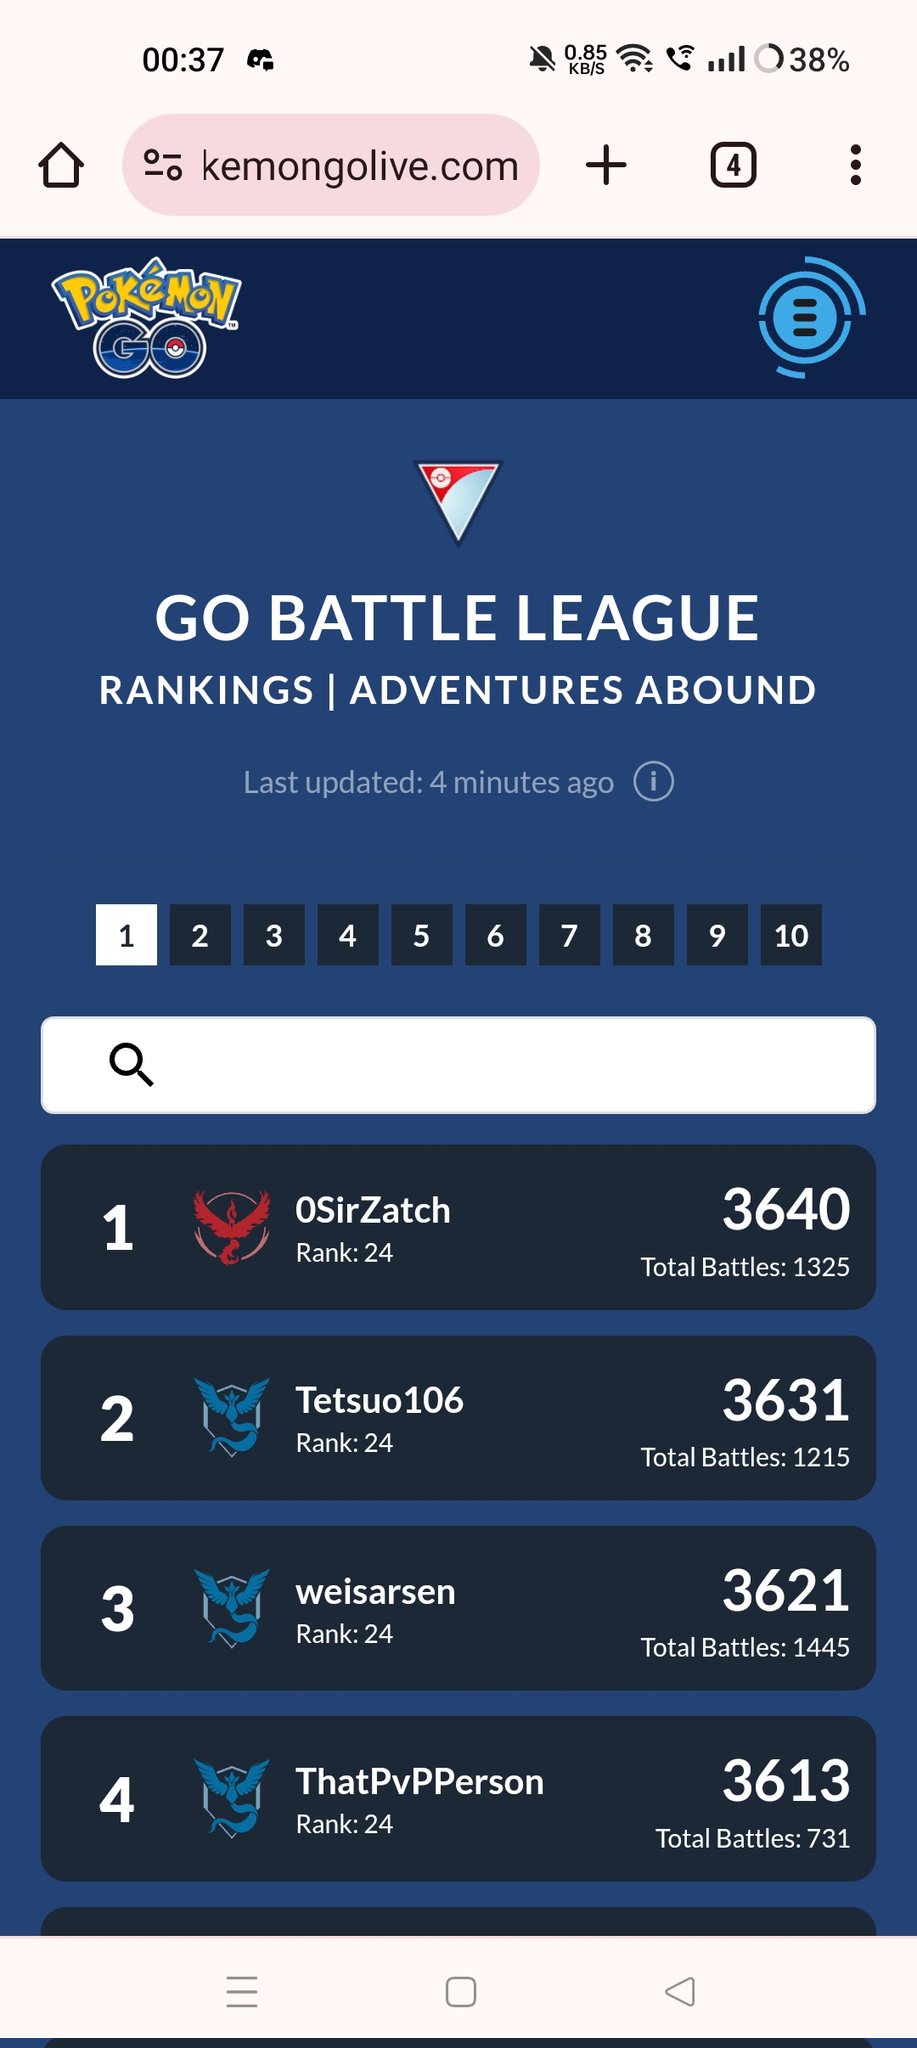 NOW! New GO Battle League Leaderboard!